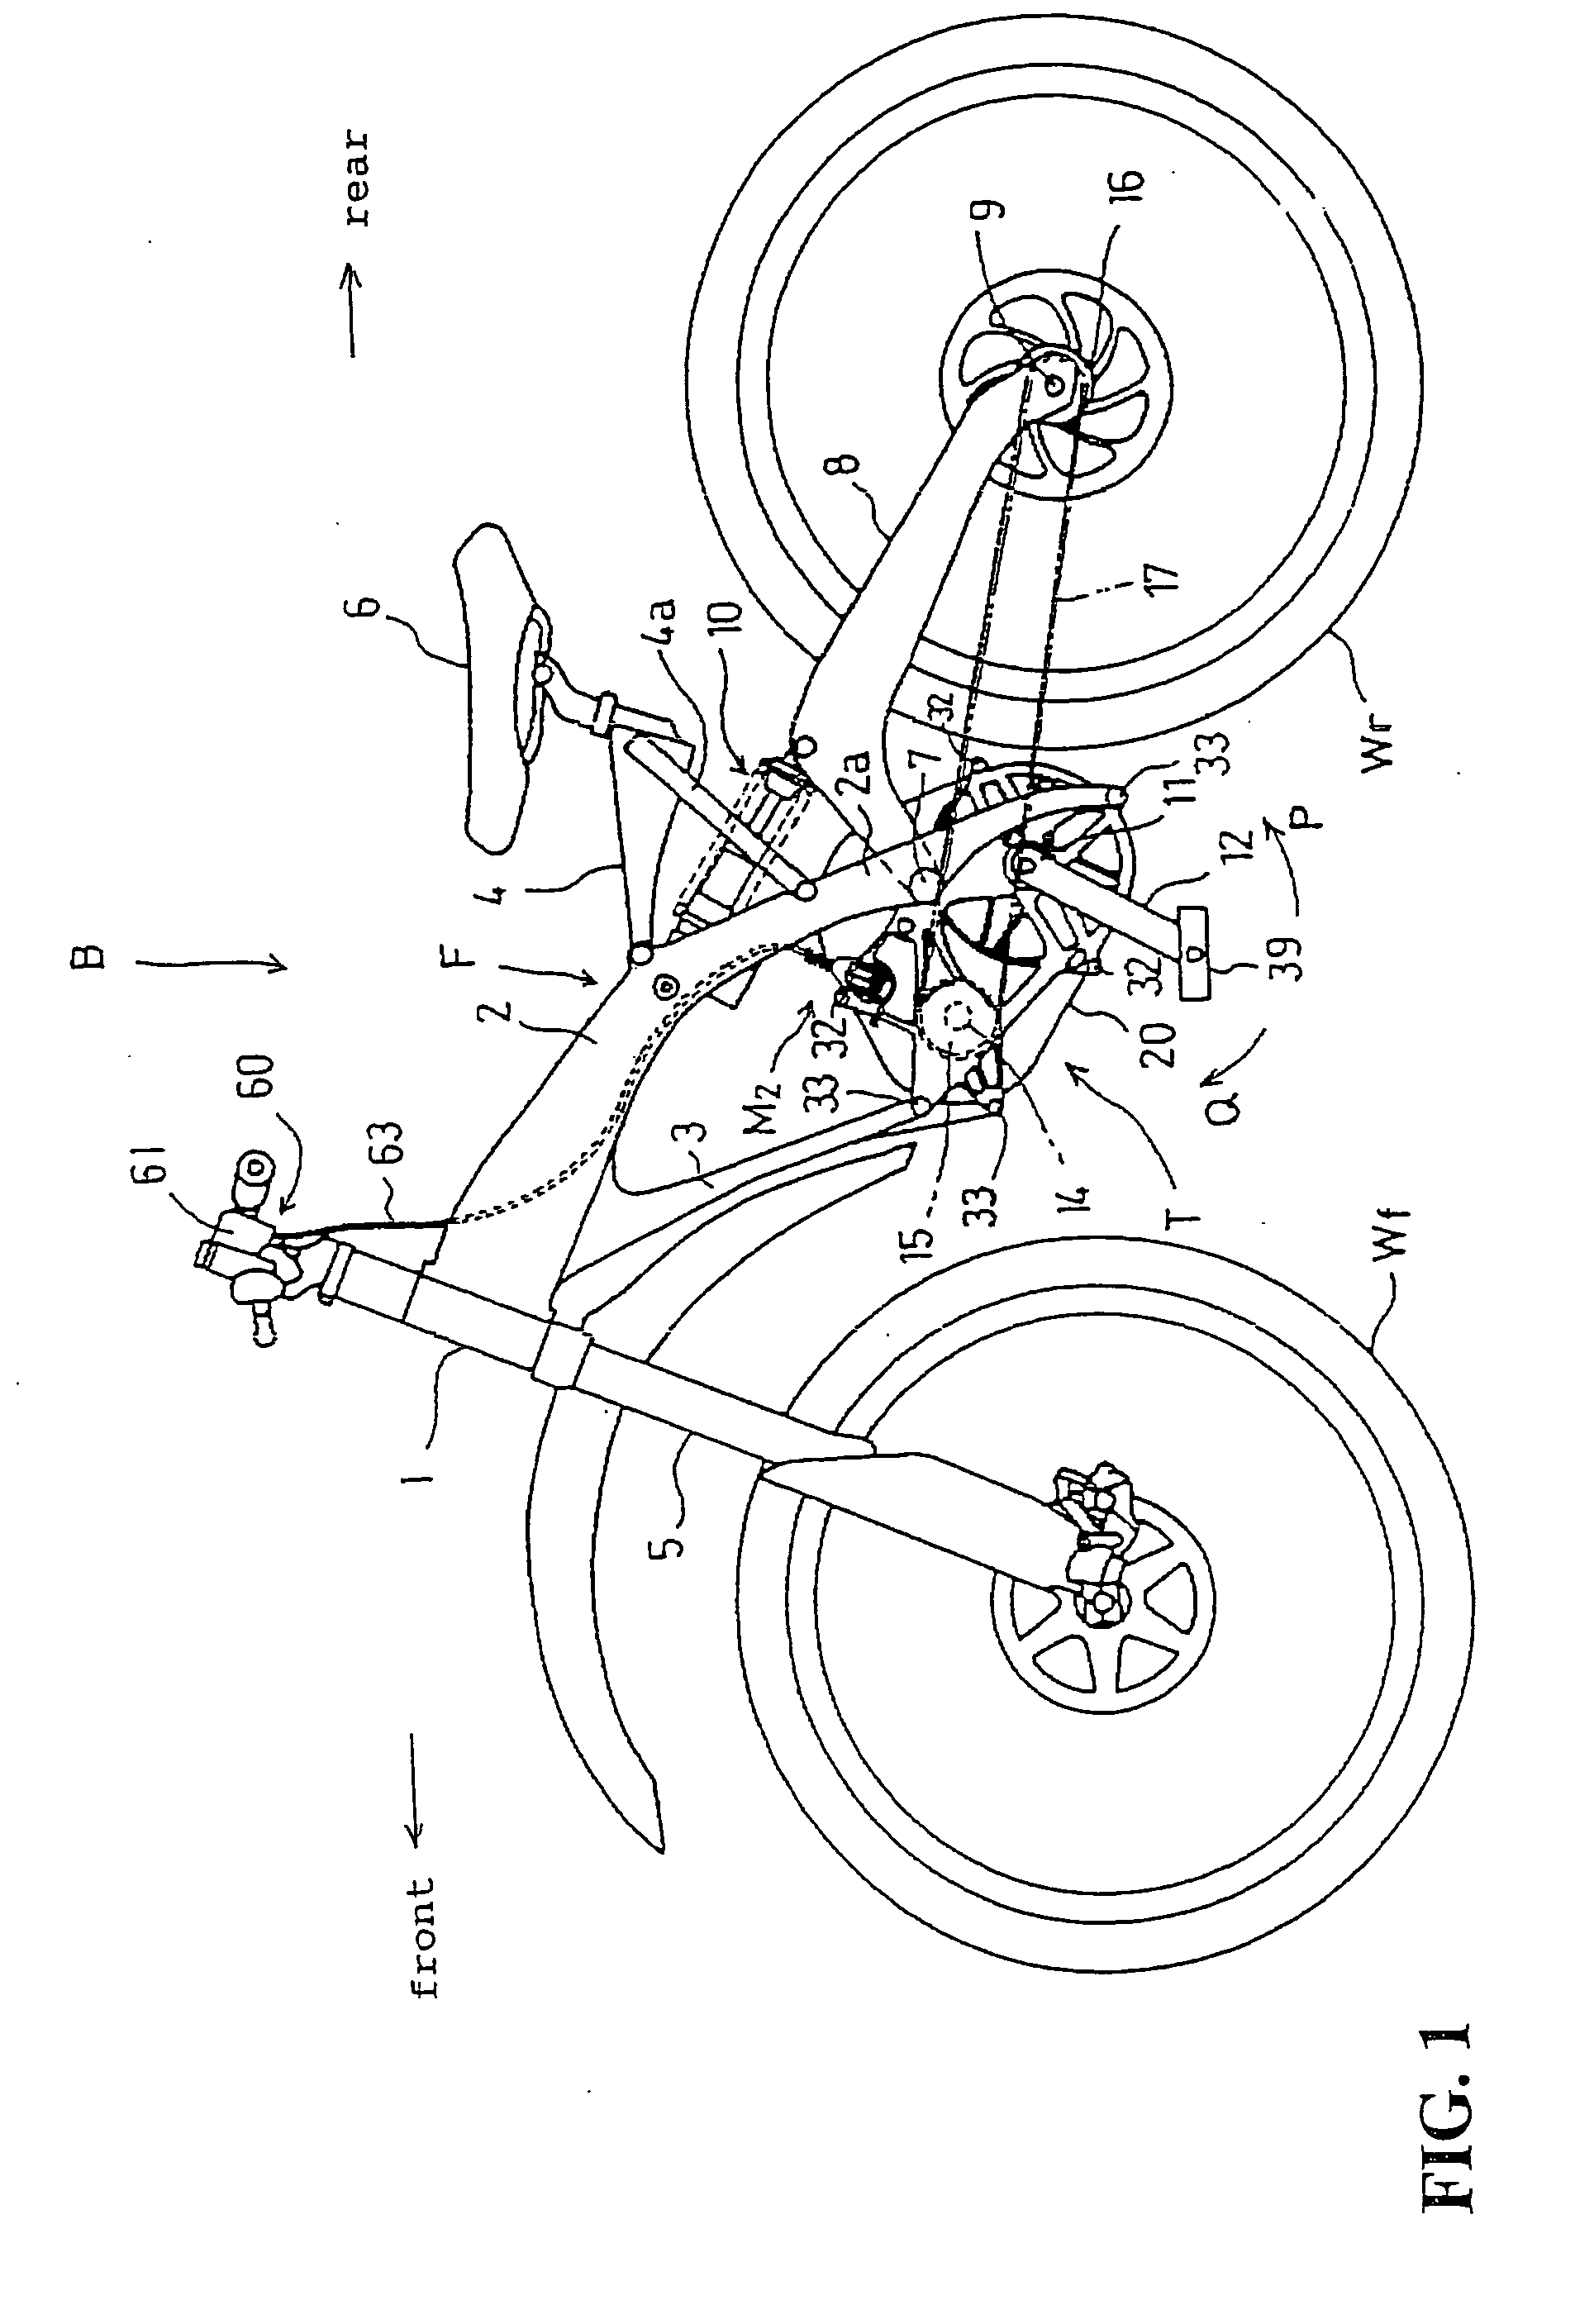 Drive sprocket wheel slide restricting structure of bicycle transmission